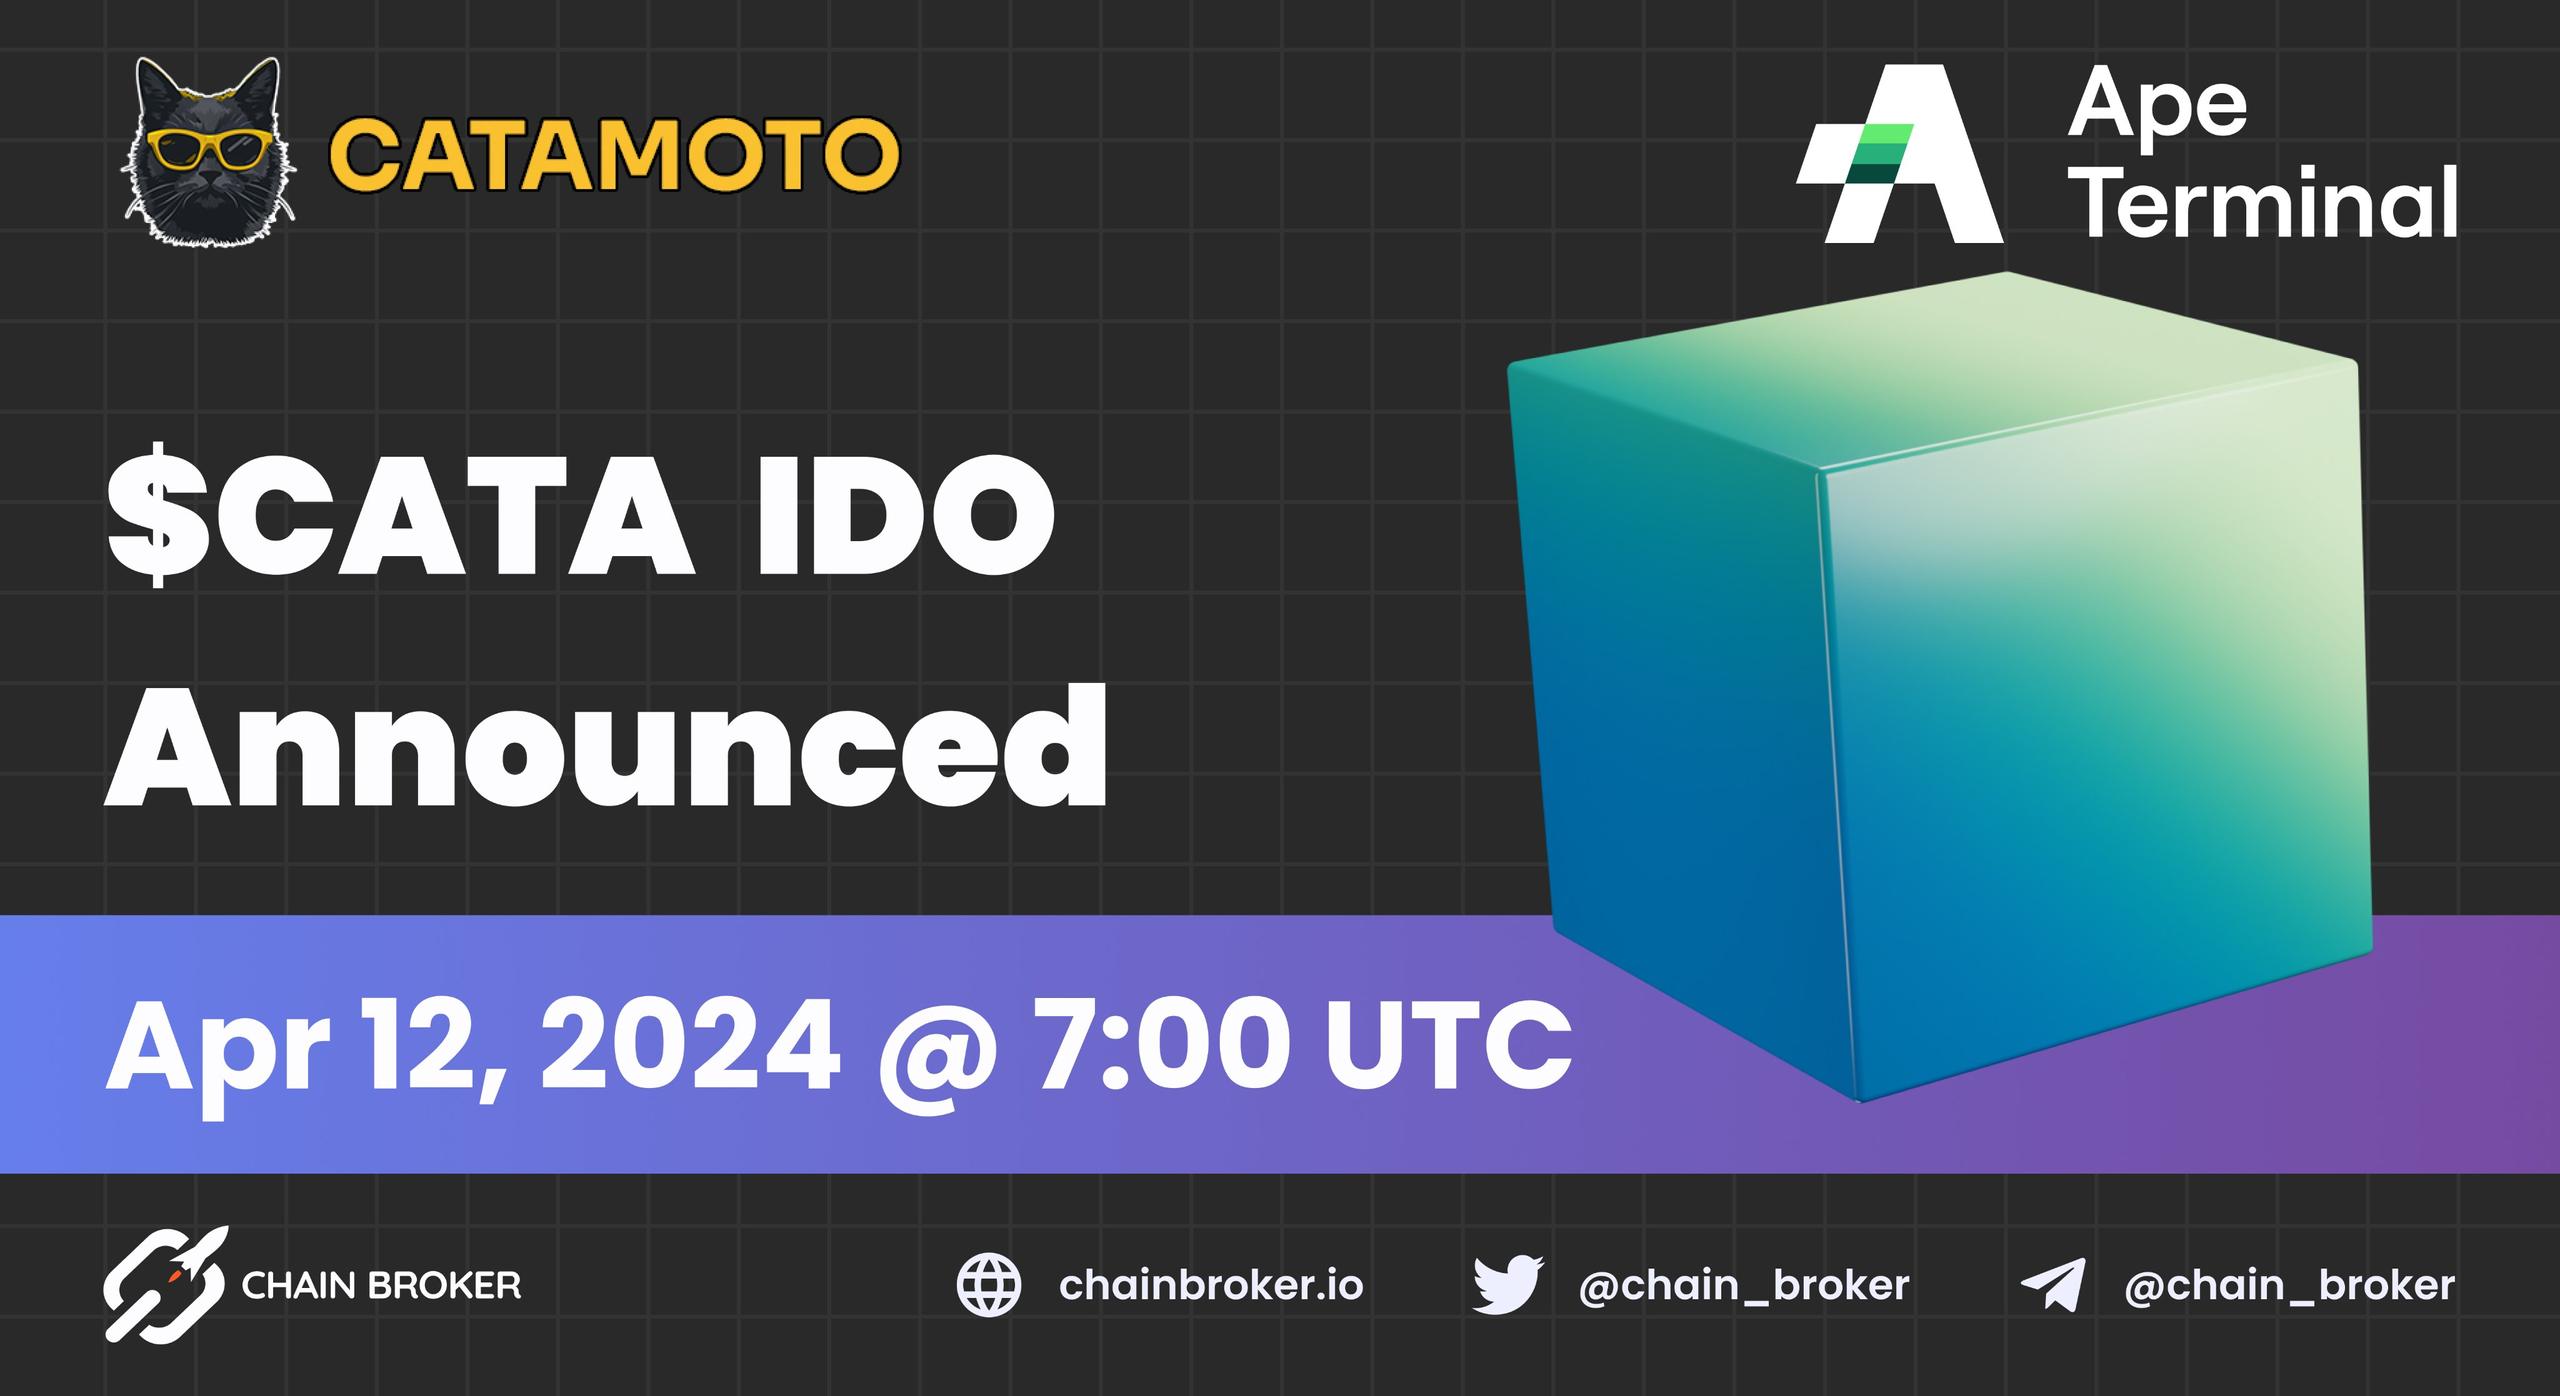 Catamoto has announced its IDO on Ape Terminal